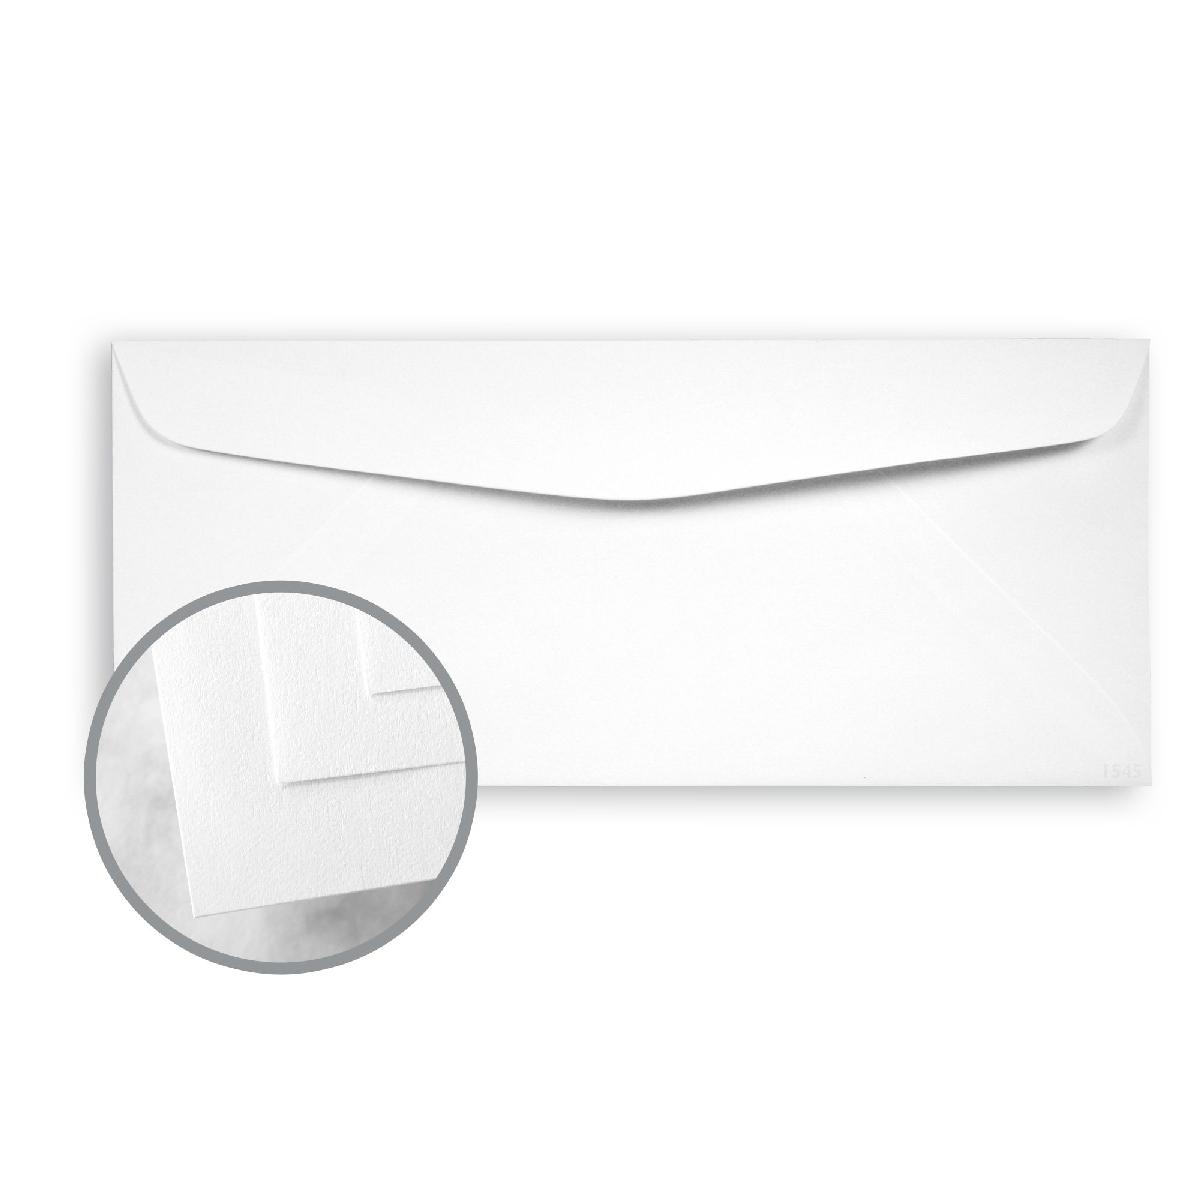 Mohawk® Carnival Stellar White Smooth 70 lb. Text 30-Recycled No. 10 Envelopes 500 per Box